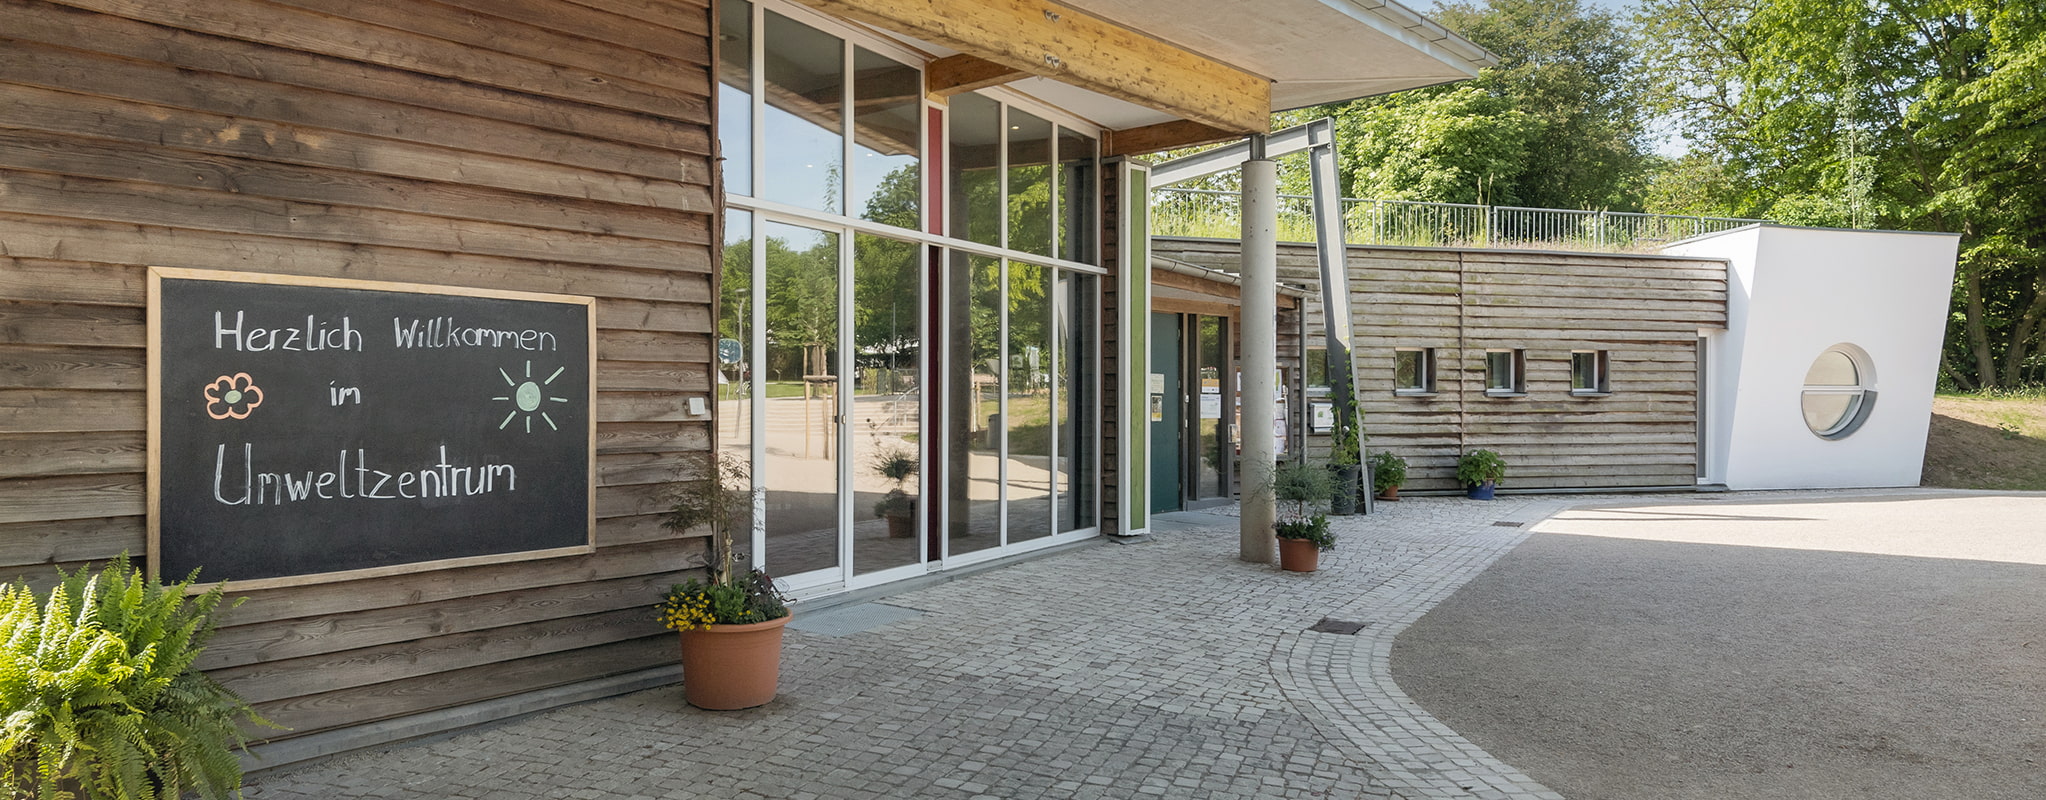 Umweltzentrum - Tourismus Fulda